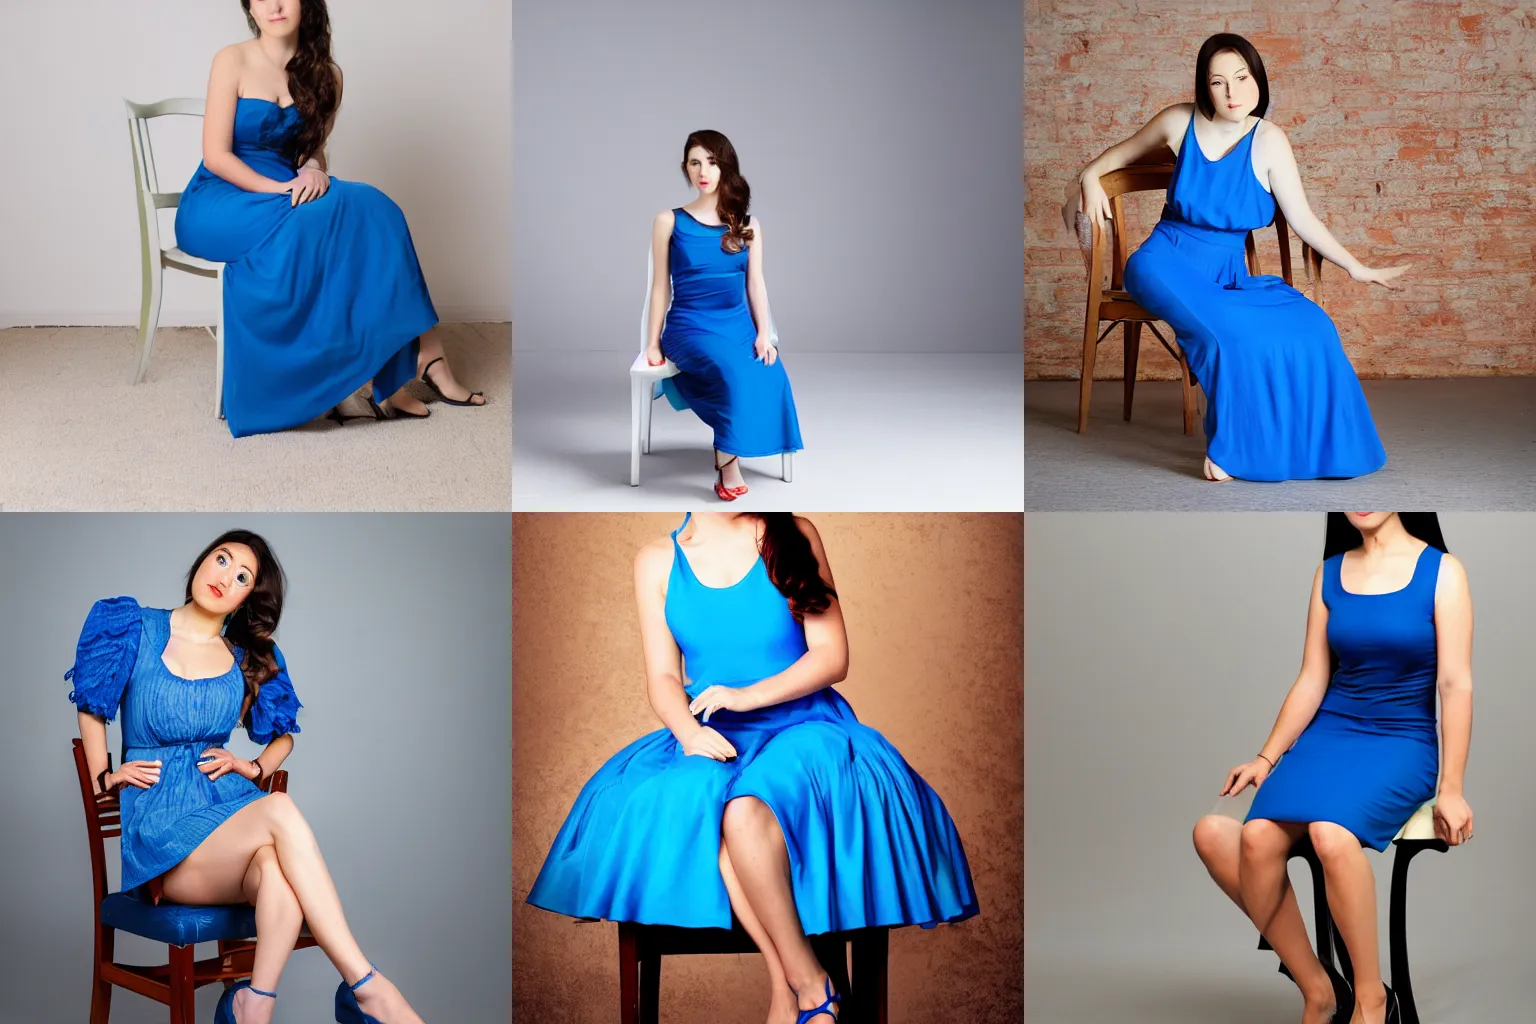 Prompt: Gal Godot 24yo blue dress sitting on a chair studio lighting